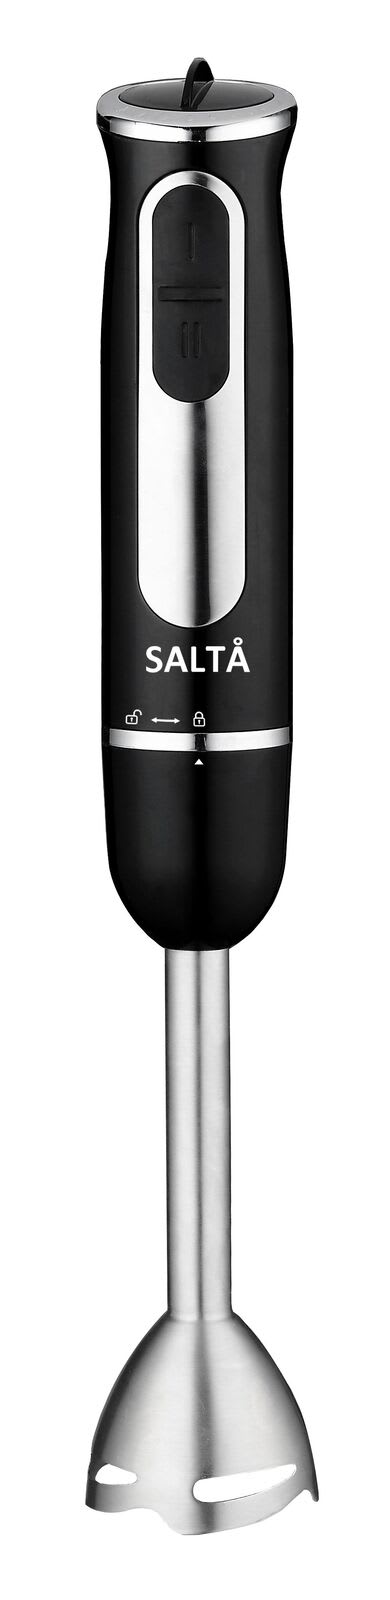 SALTA 800W Portable Stick Blender